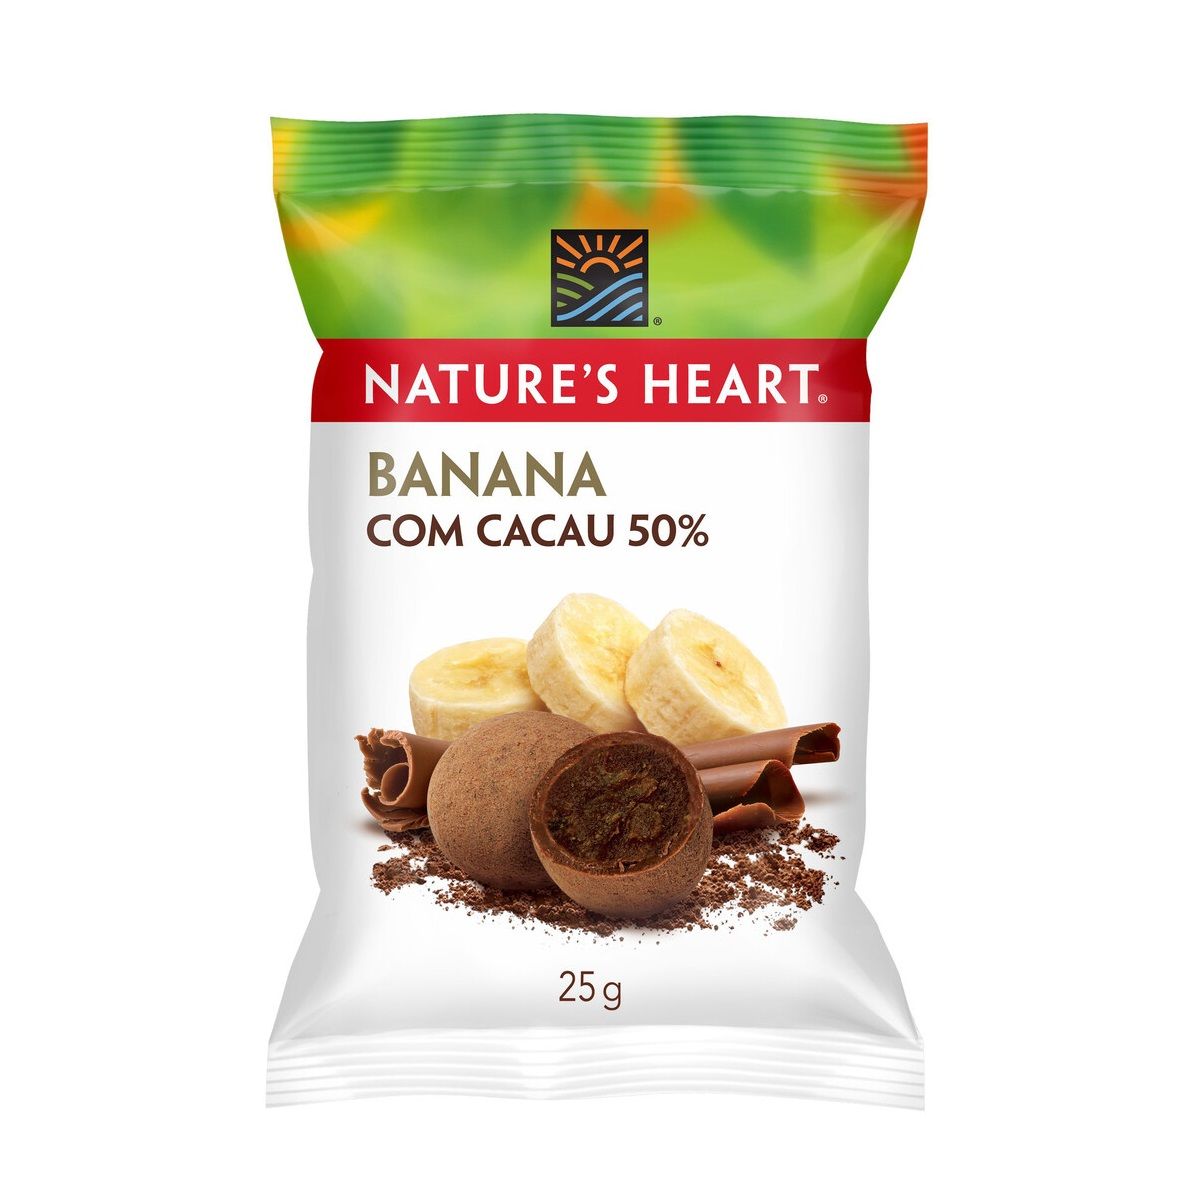 Banana com Cacau 50% Nature's Heart Pacote 25g